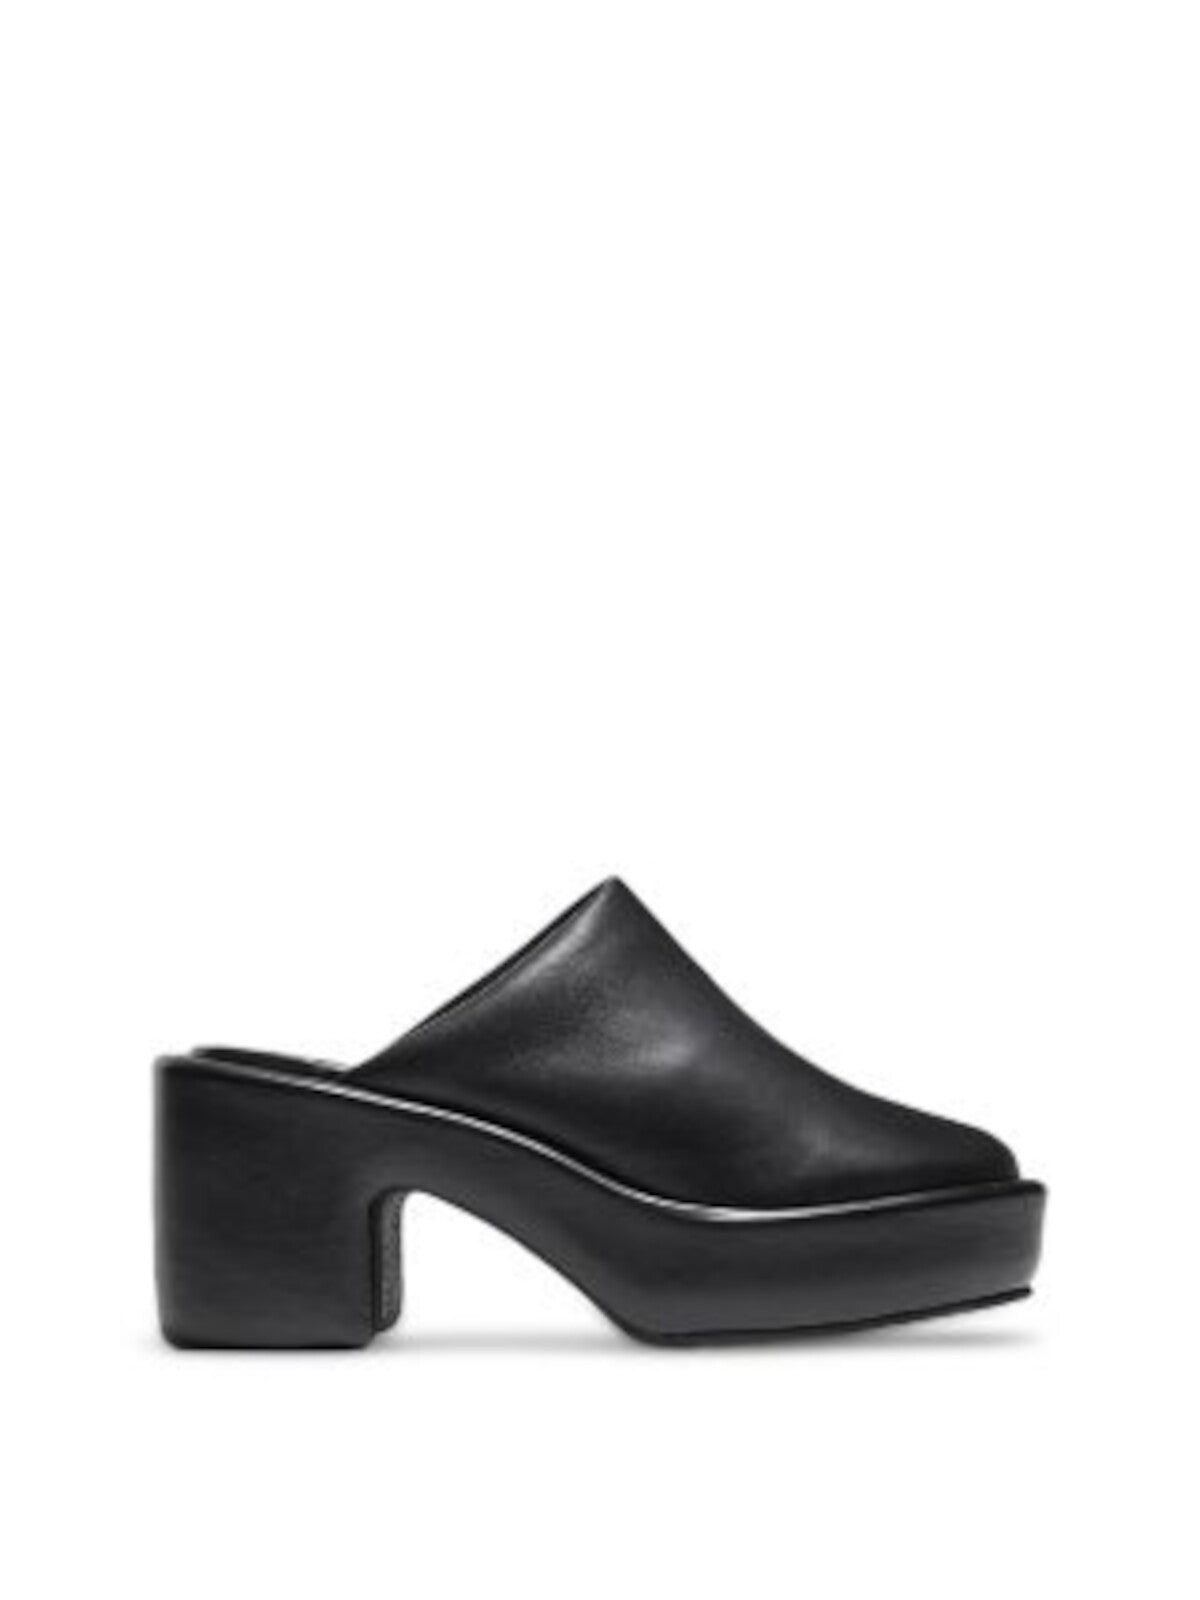 CLERGERIE Womens Black 1-1/2" Platform Dorice Round Toe Block Heel Slip On Leather Heeled Mules Shoes 39.5